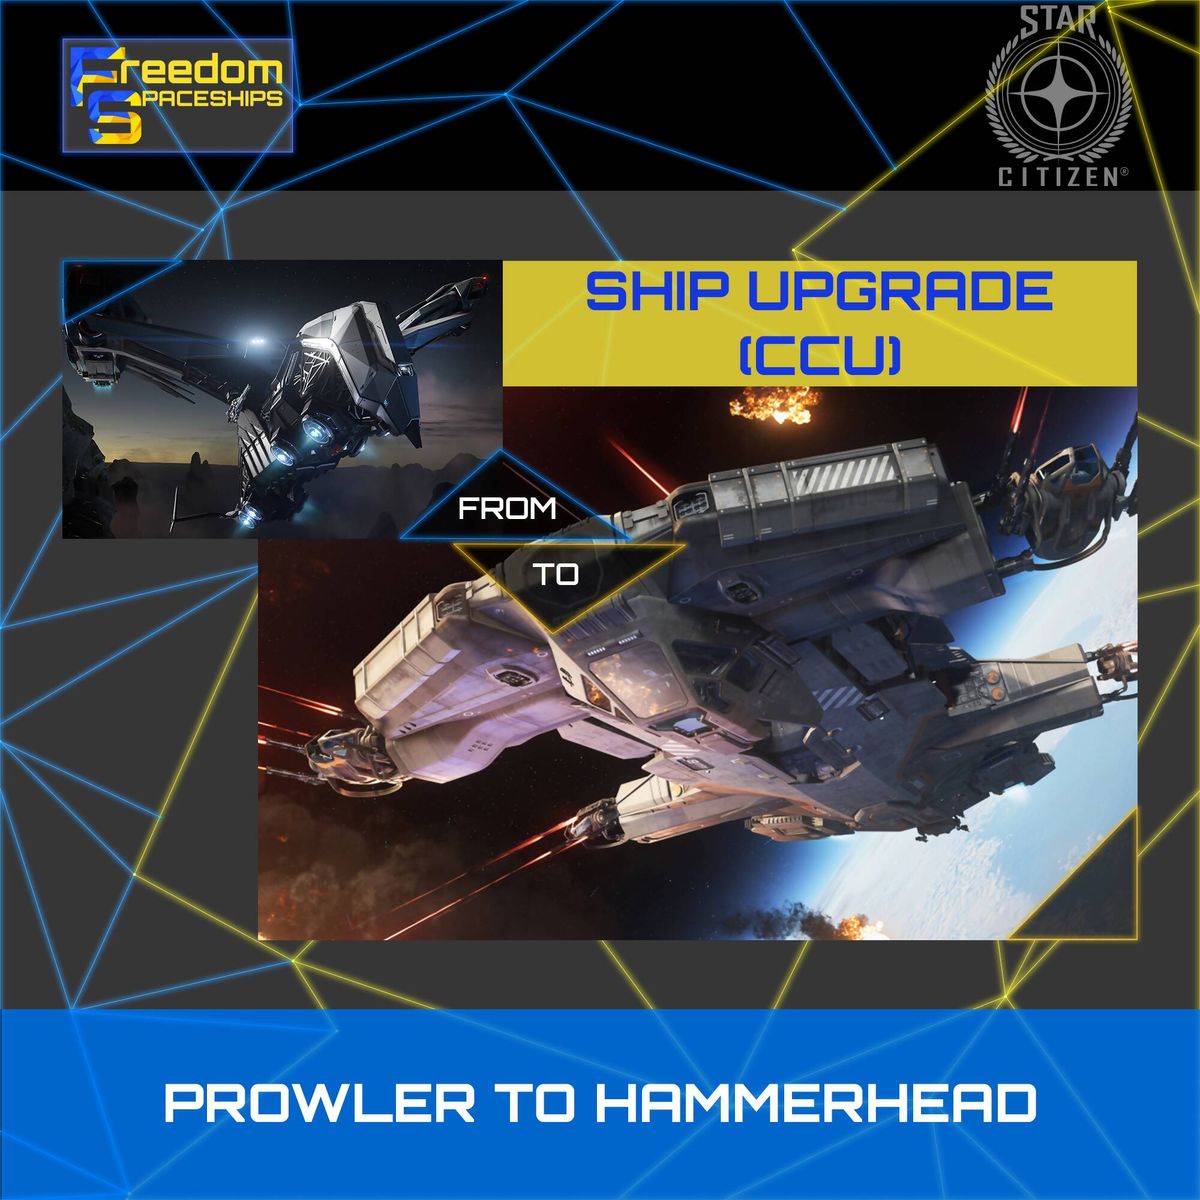 Upgrade - Prowler to Hammerhead